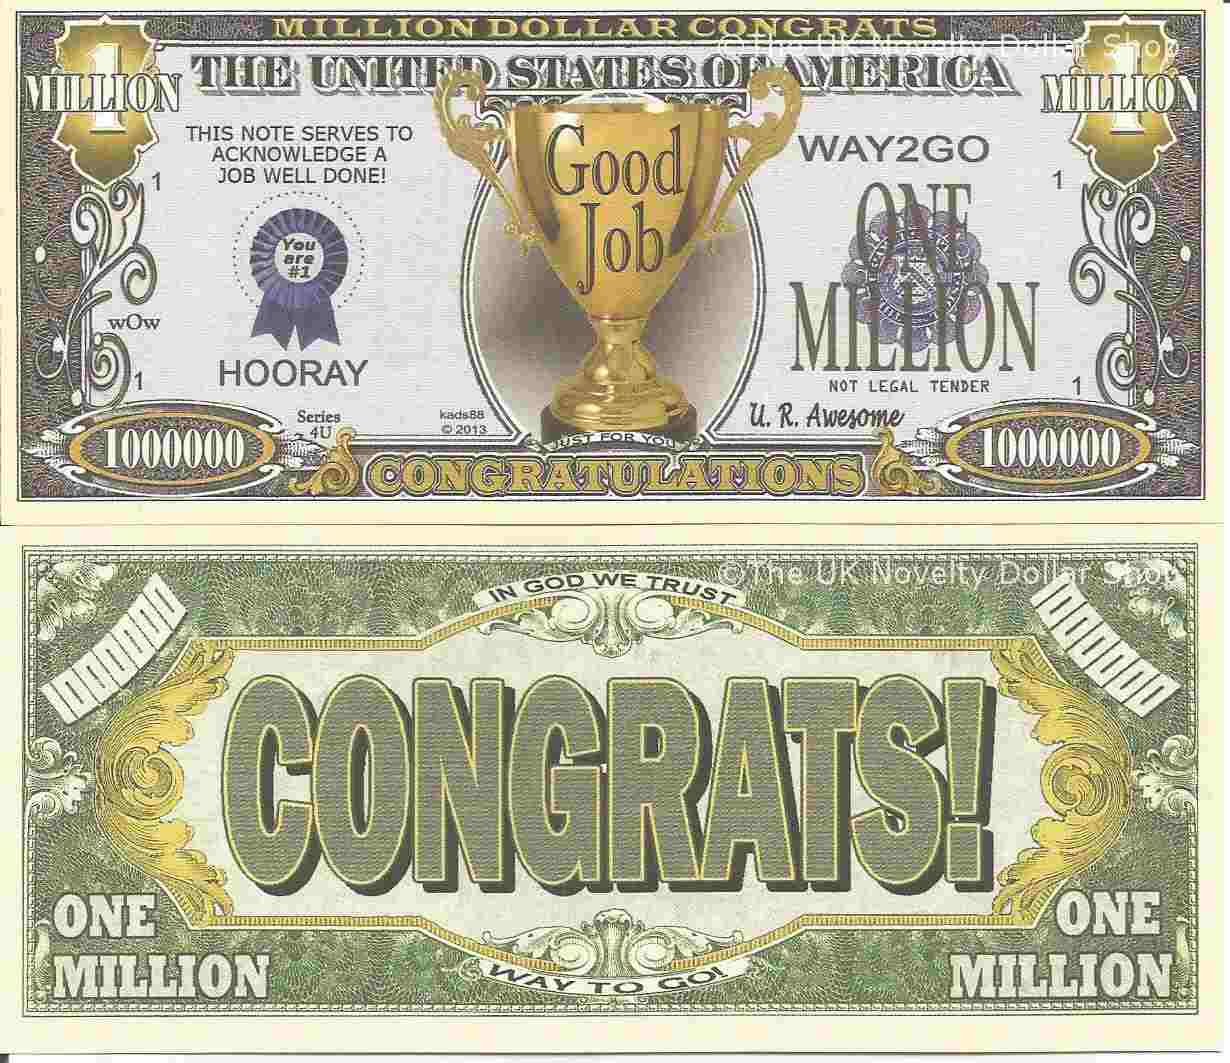 Congratulations Good Job Million Dollar Bills x 2 Well Done Congrats Gold Cup